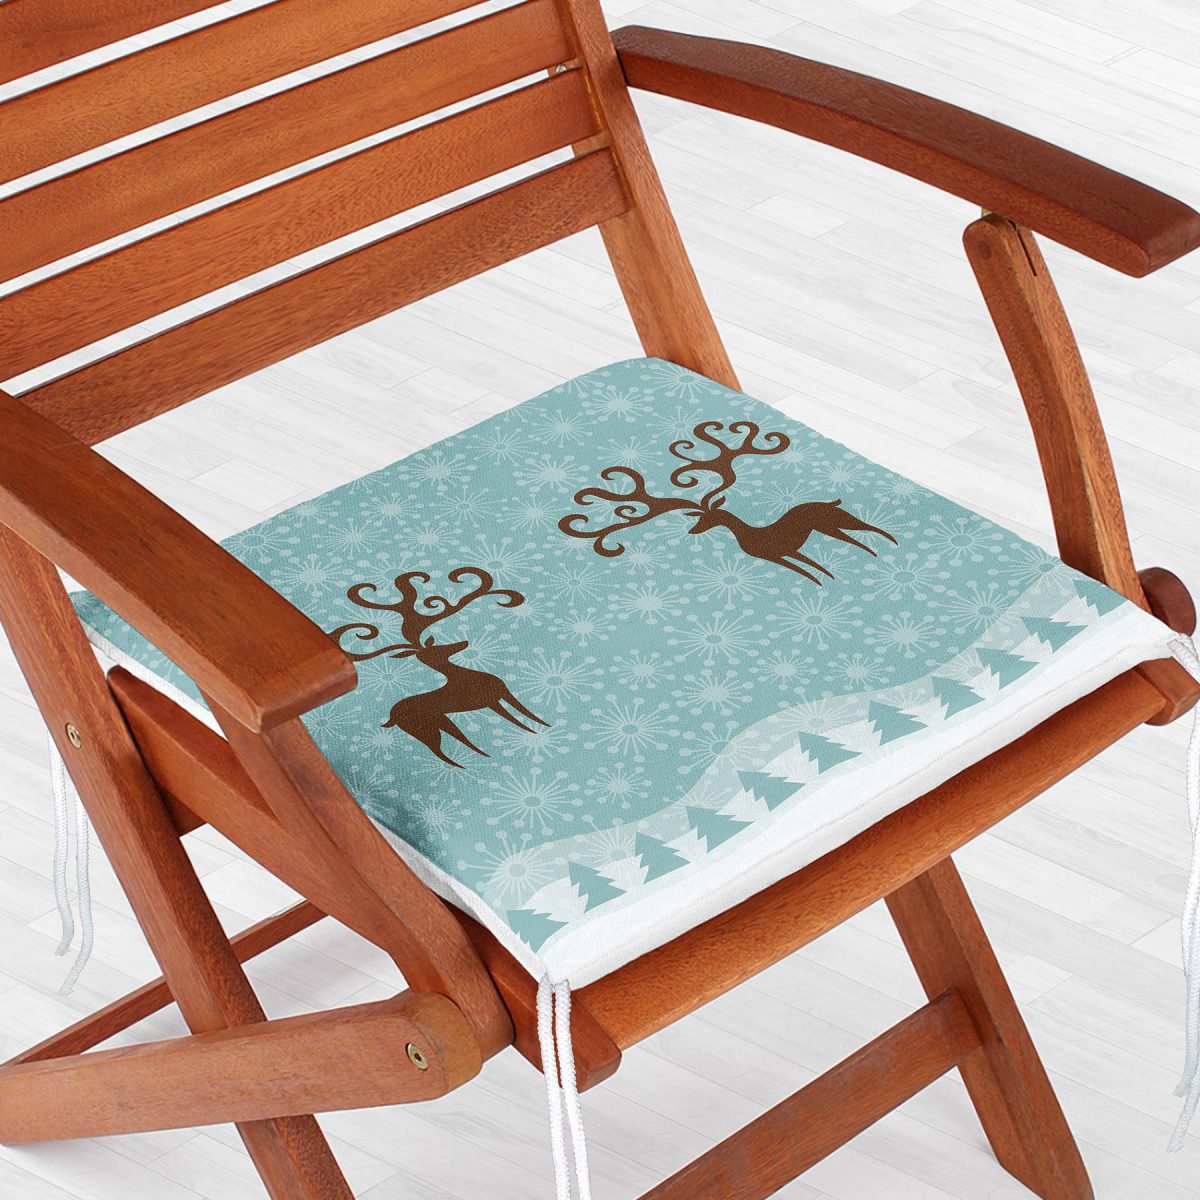 Merry Christmas Dijital Baskılı Fermuarlı Sandalye Minderi Realhomes